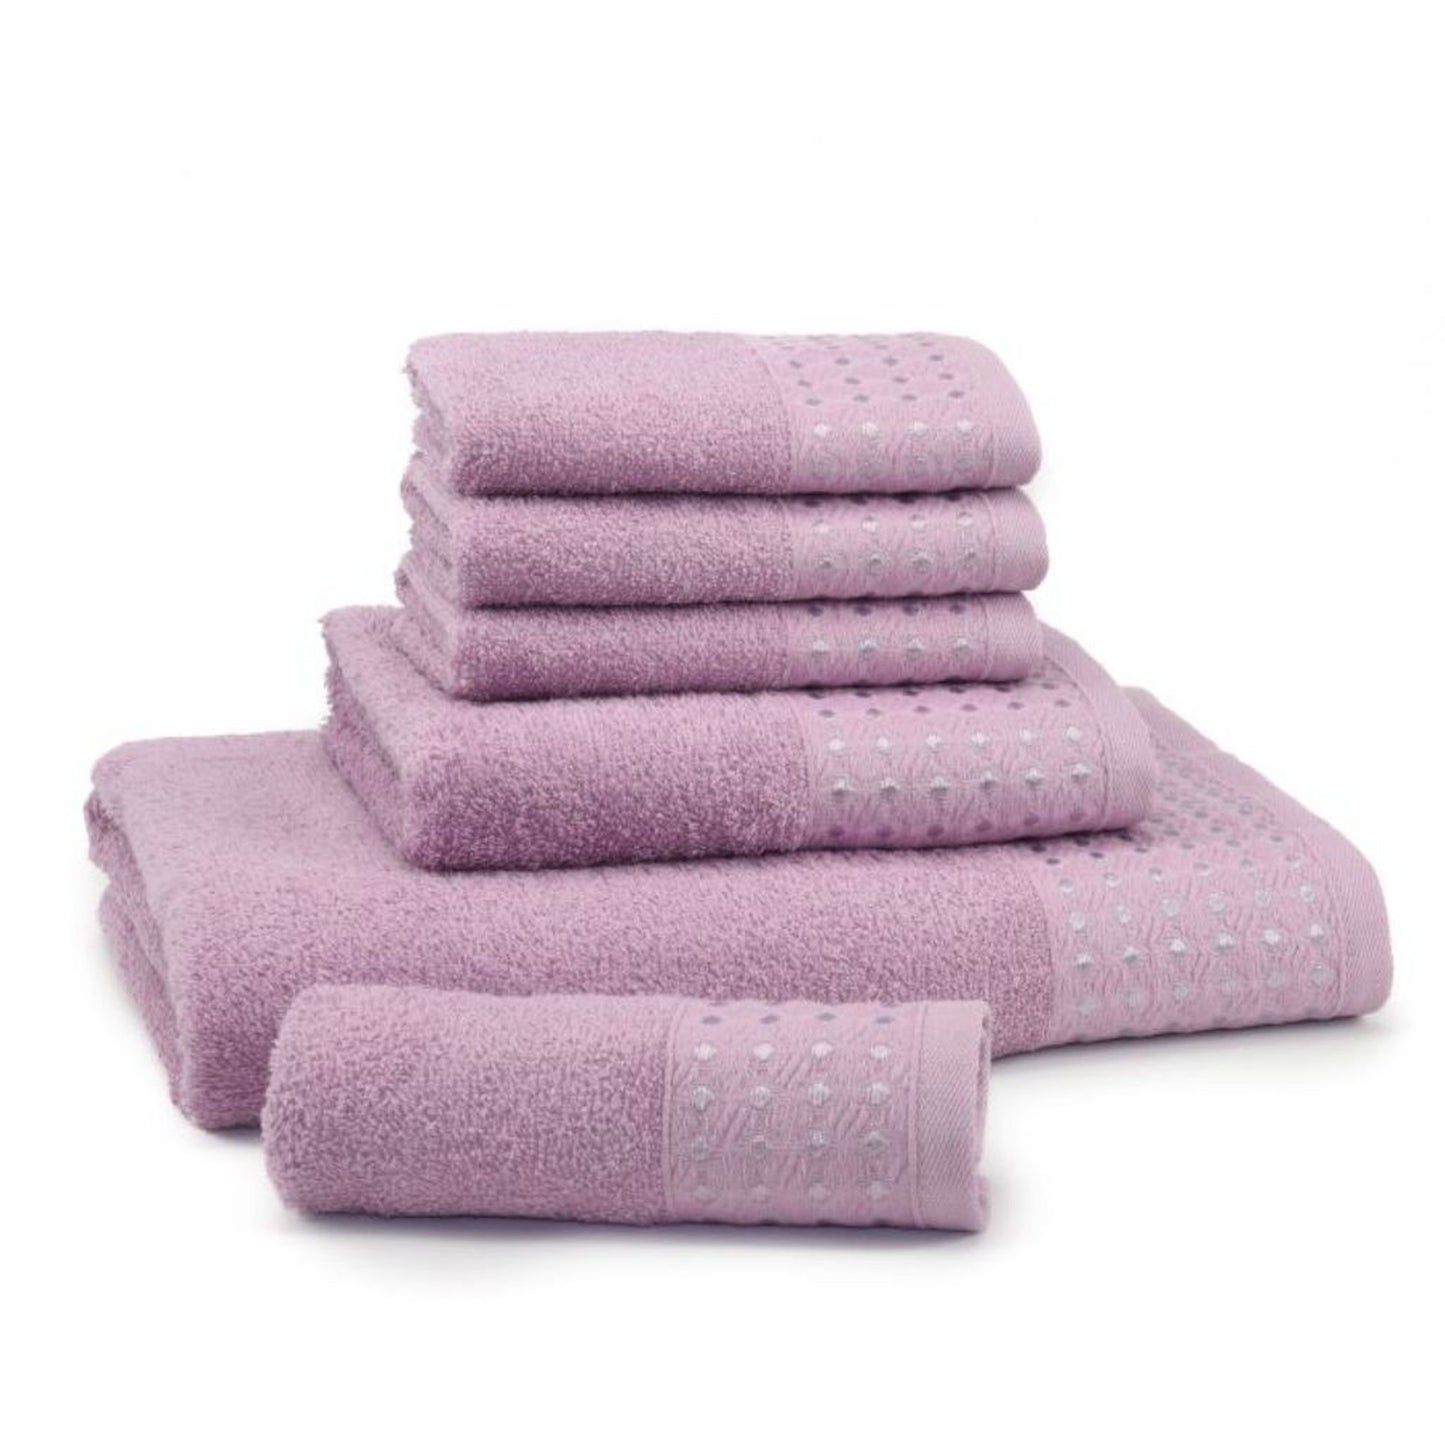 East`N Blue Petek Turkish Cotton Lilac Bath Towel